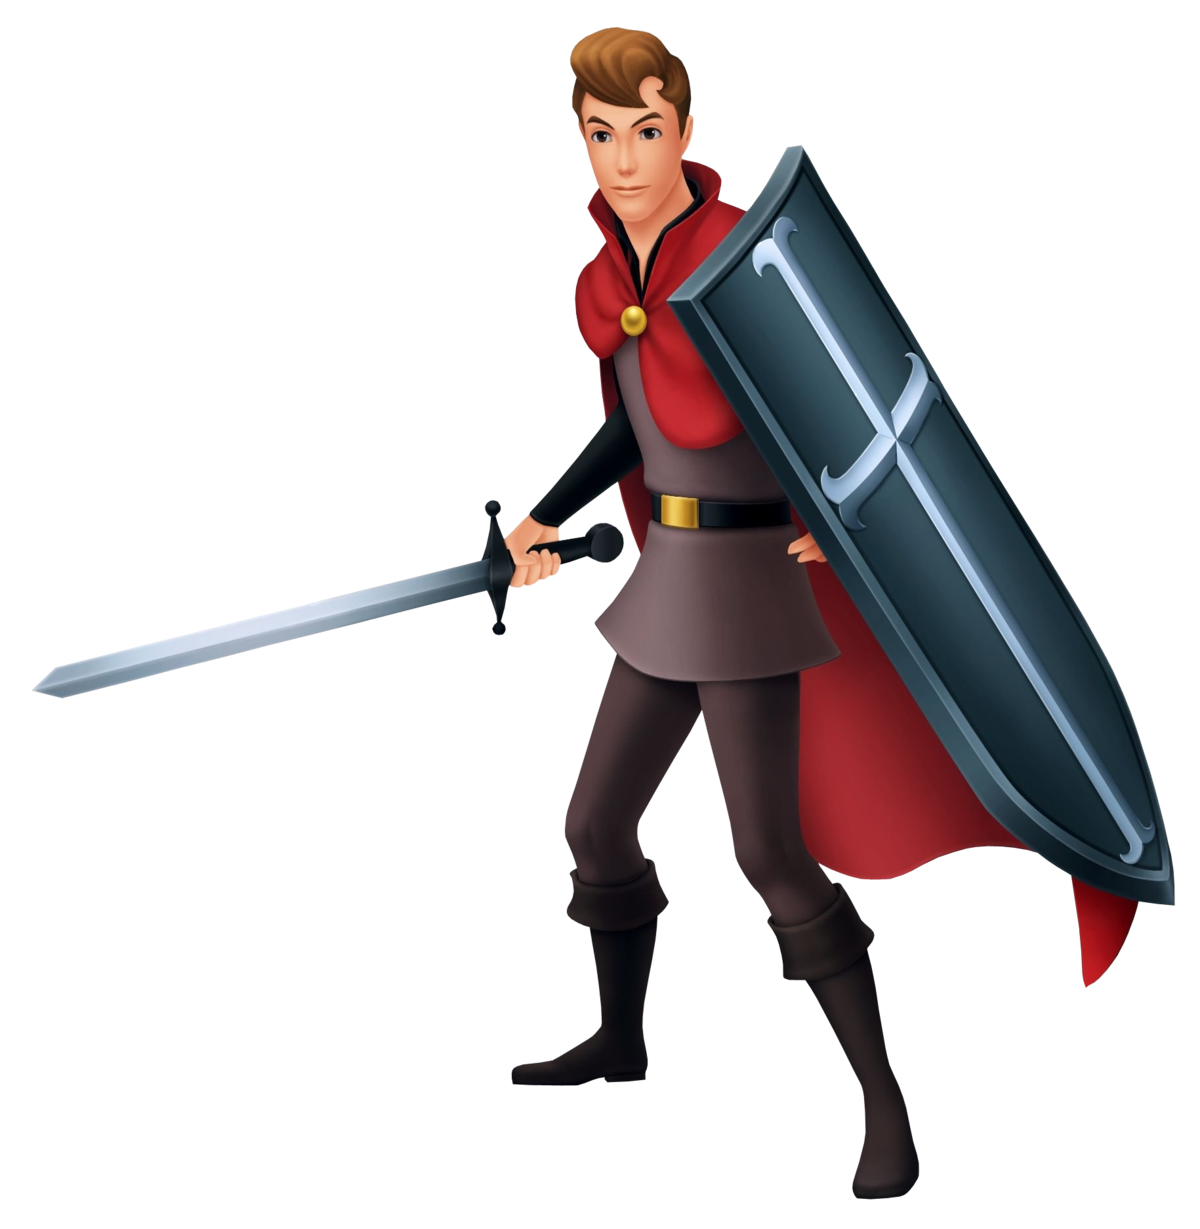 Prince Phillip - Kingdom Hearts Wiki, the Kingdom Hearts encyclopedia